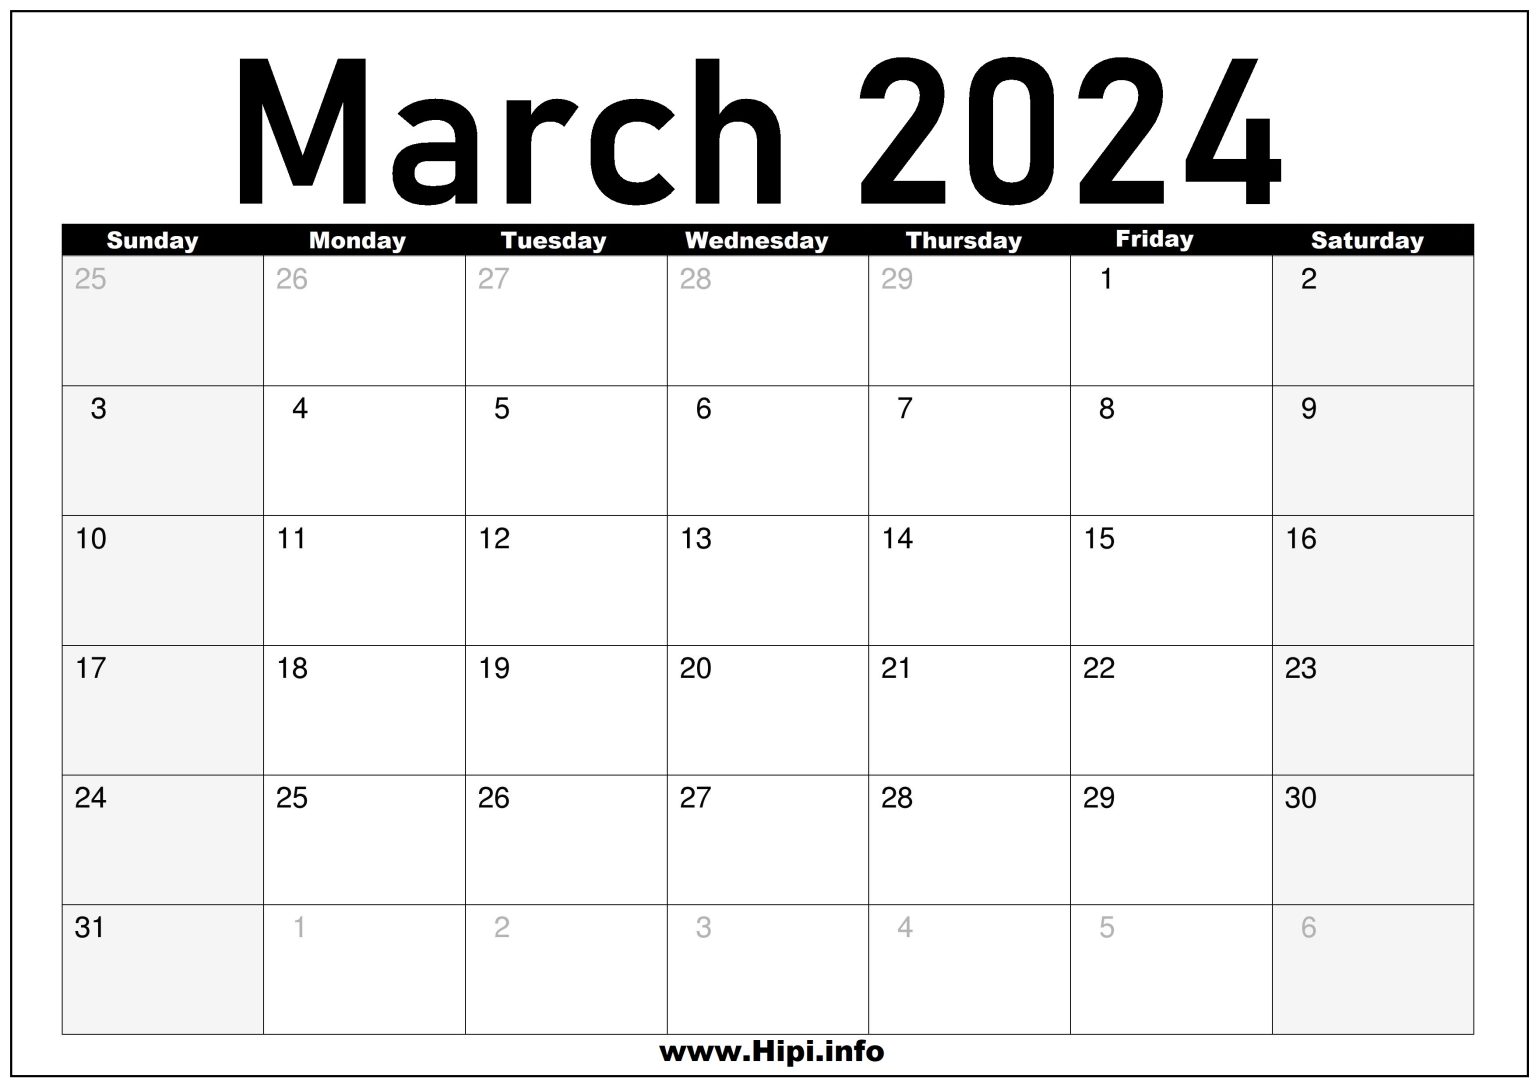 March 2024 Calendar Monthly Hipi.info